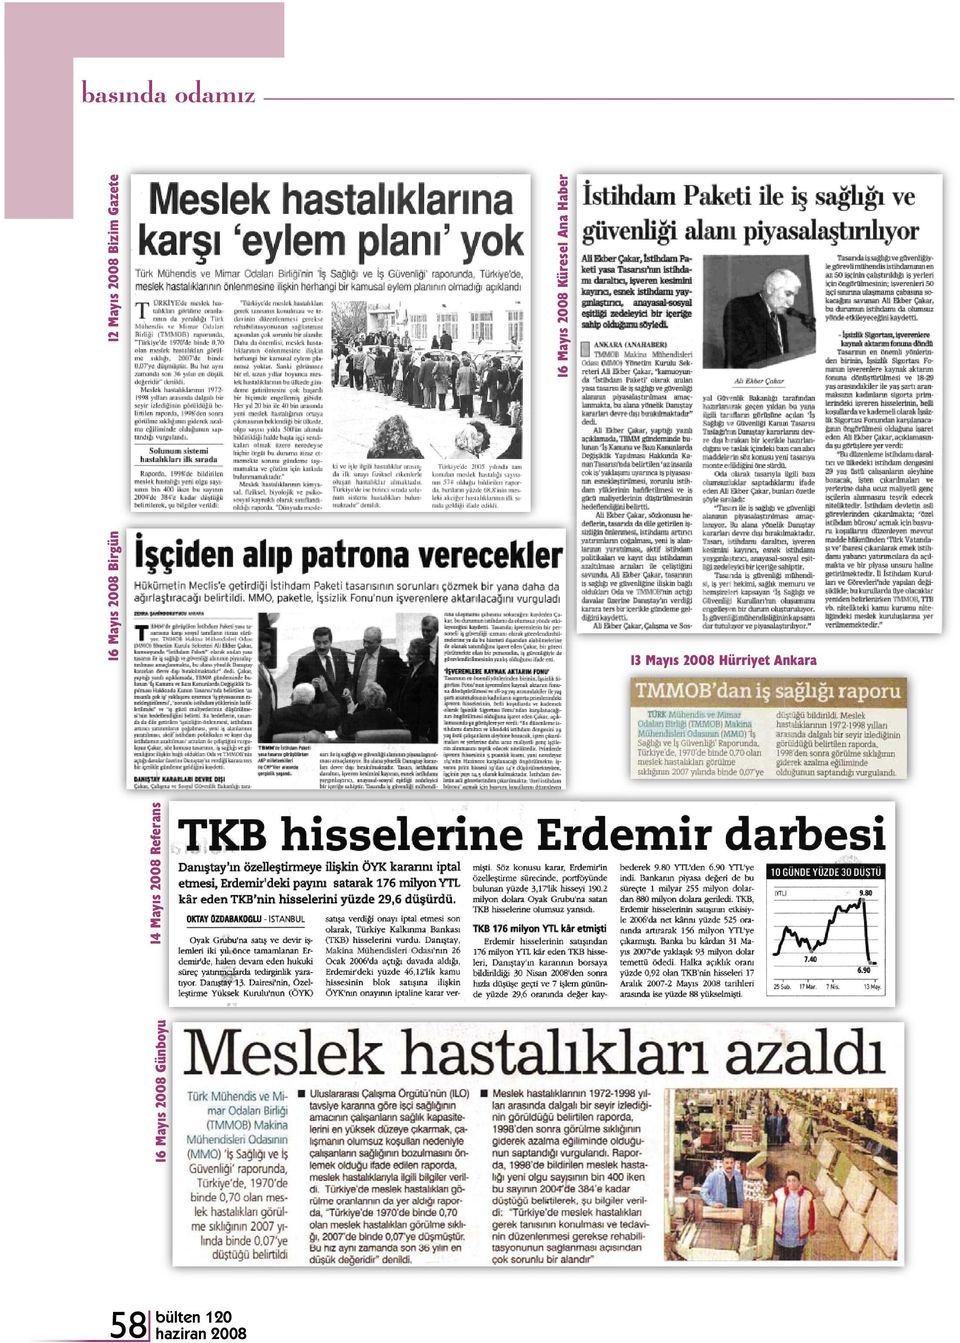 Haber 13 Mayıs 2008 Hürriyet Ankara 16